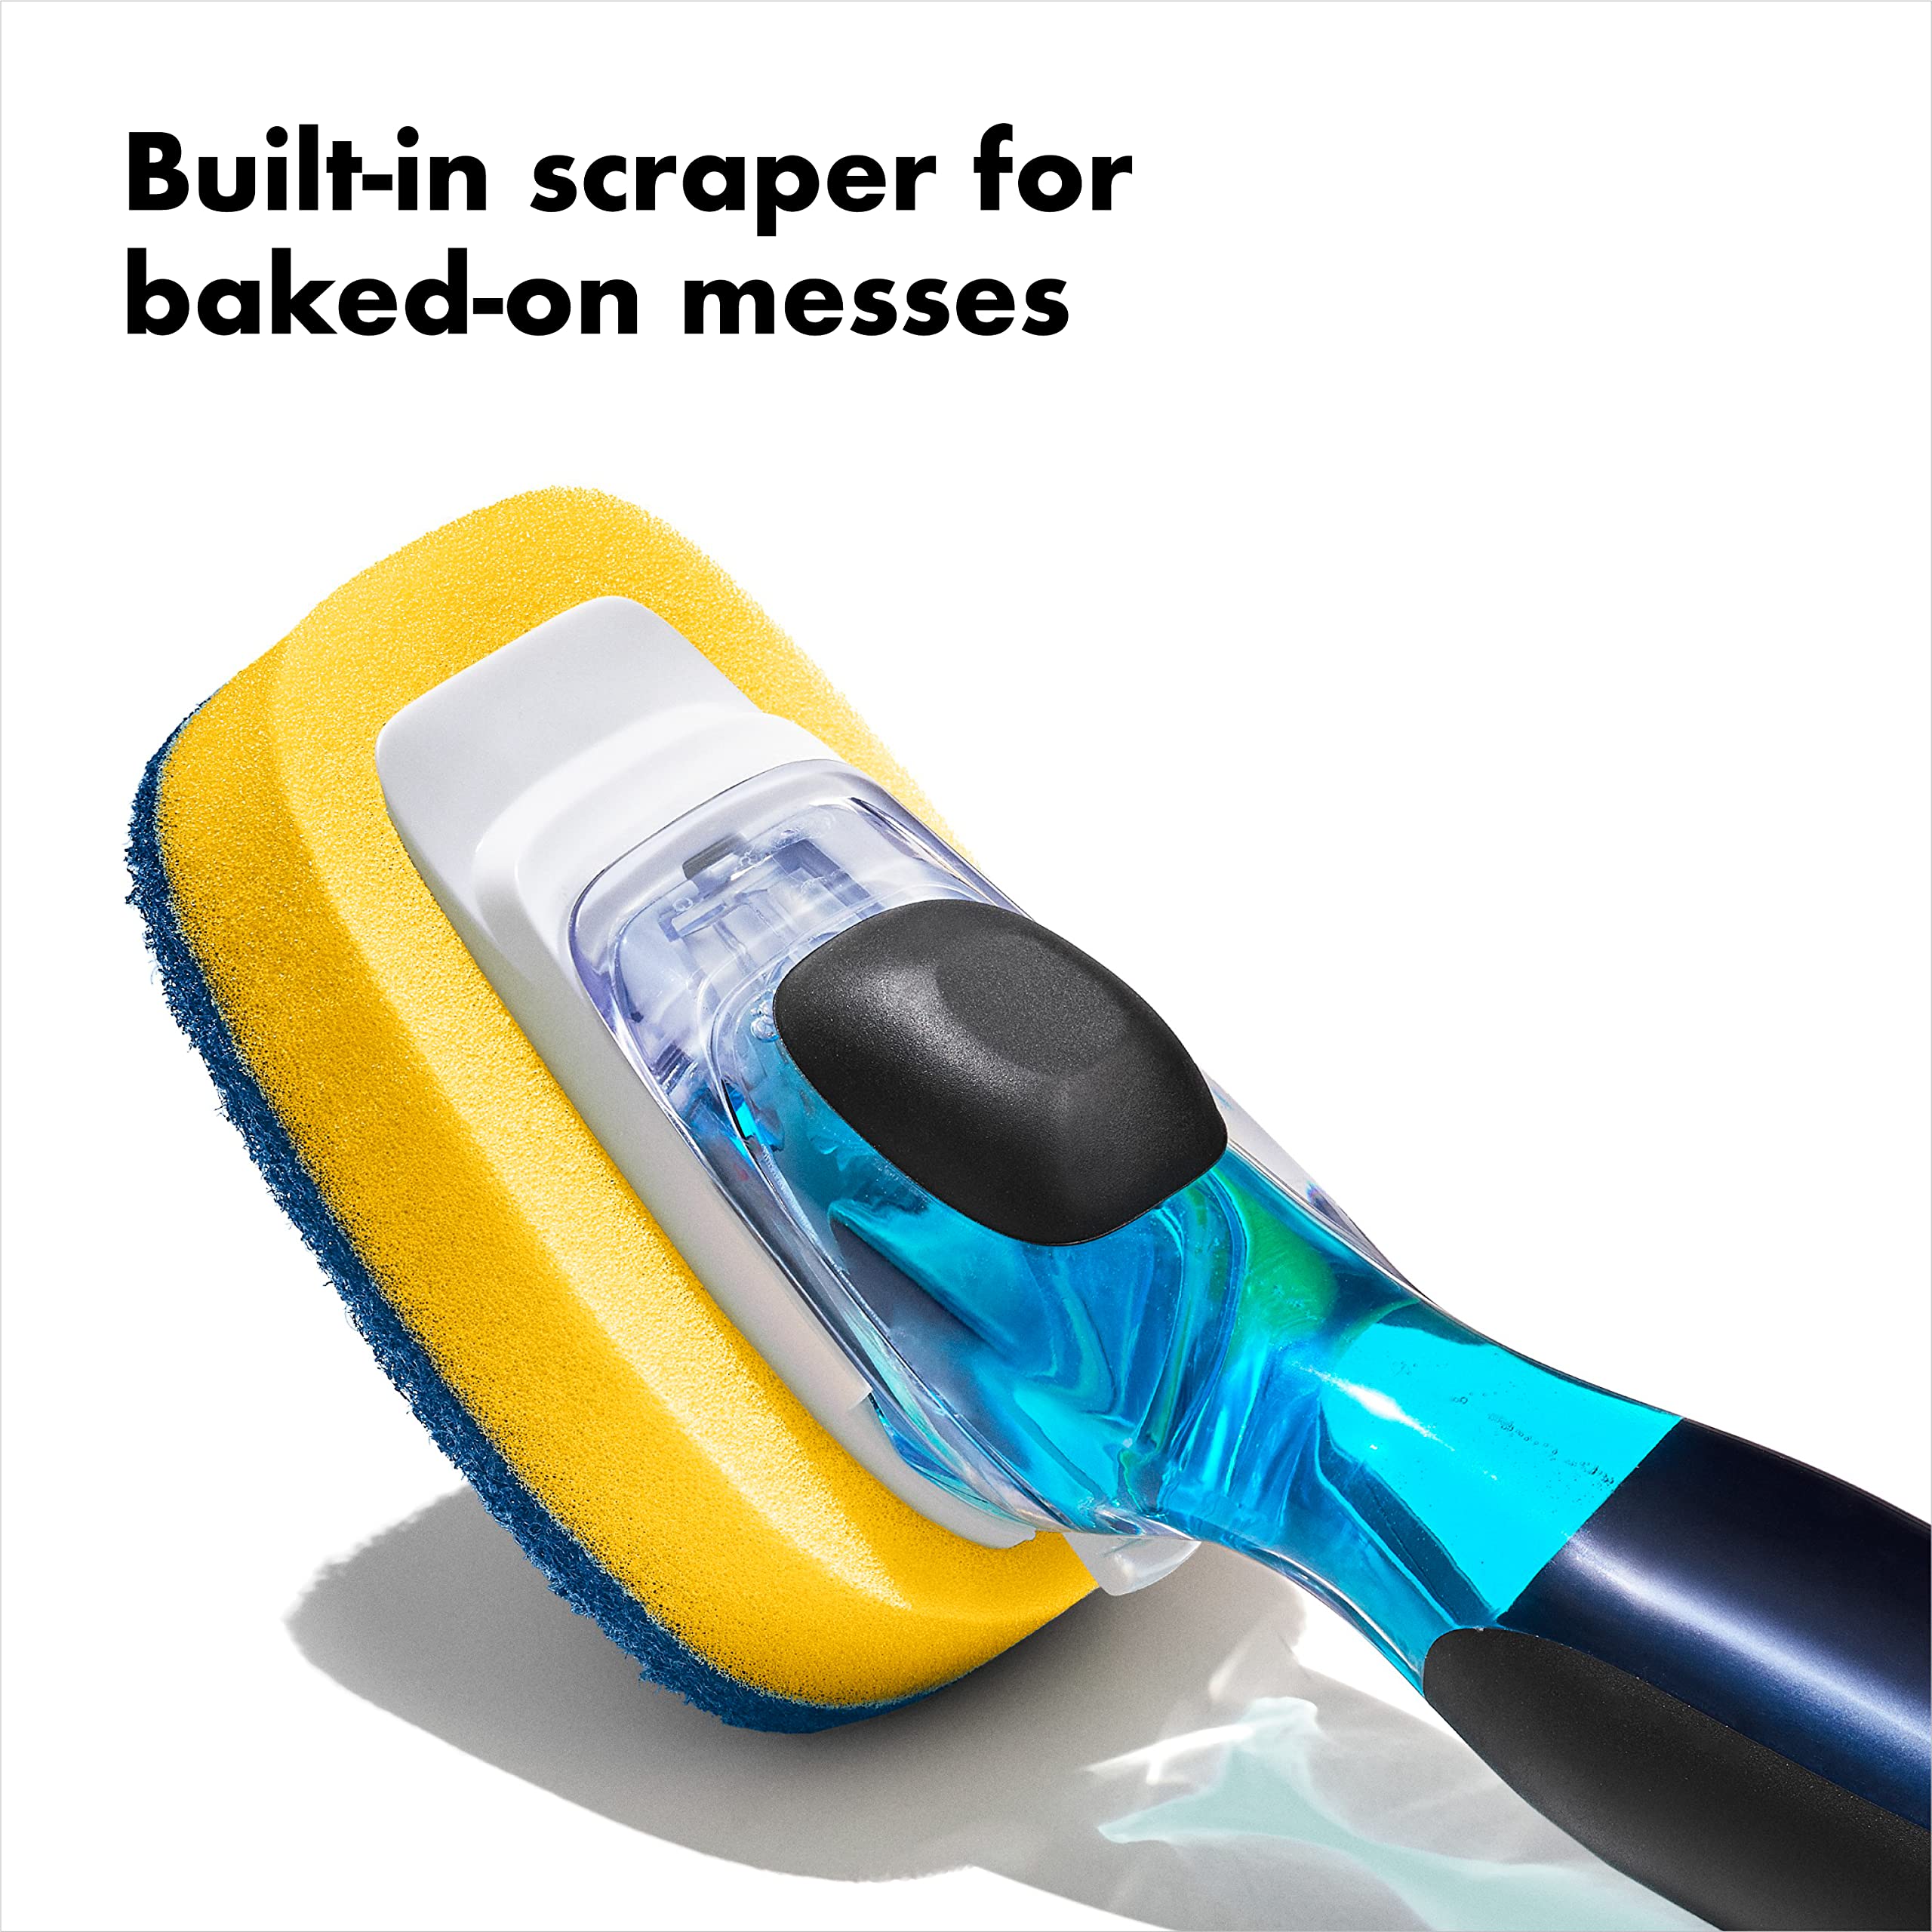 OXO NEW Good Grips Soap Dispensing Dish Scrub Refills - 2-Pack